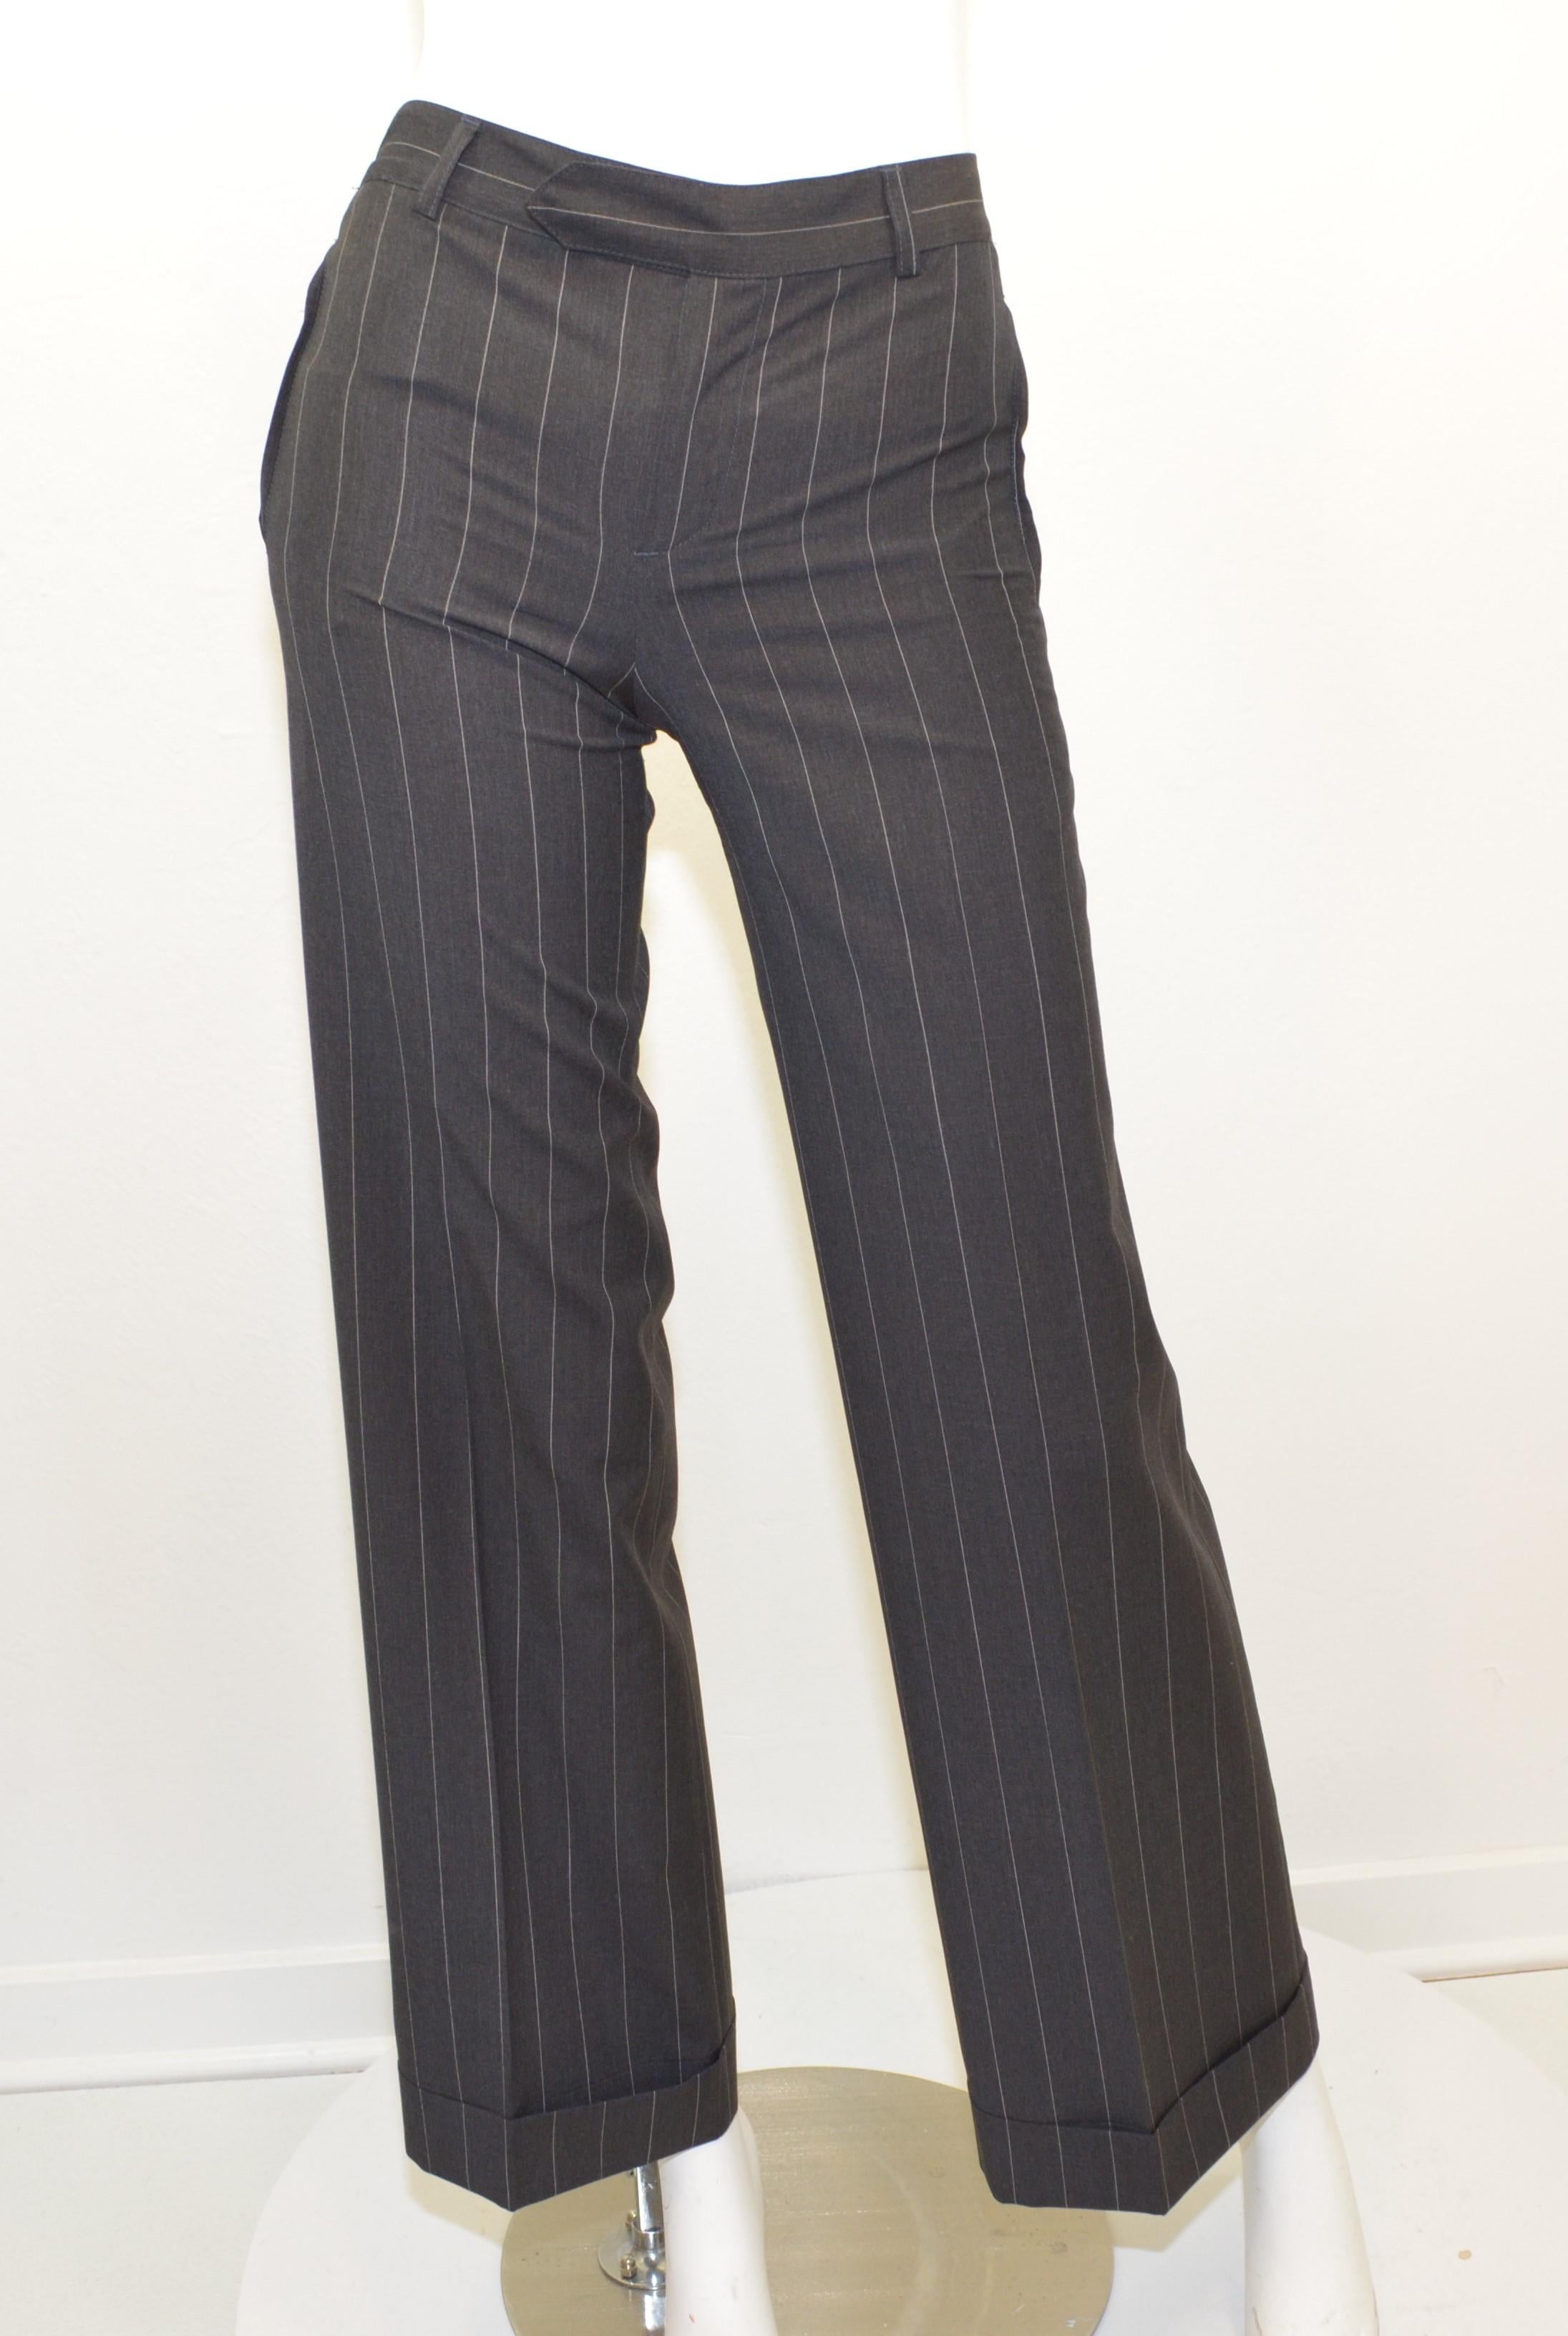 Women's Jean Paul Gaultier Pinstripe Jacket and Pants Suit Set